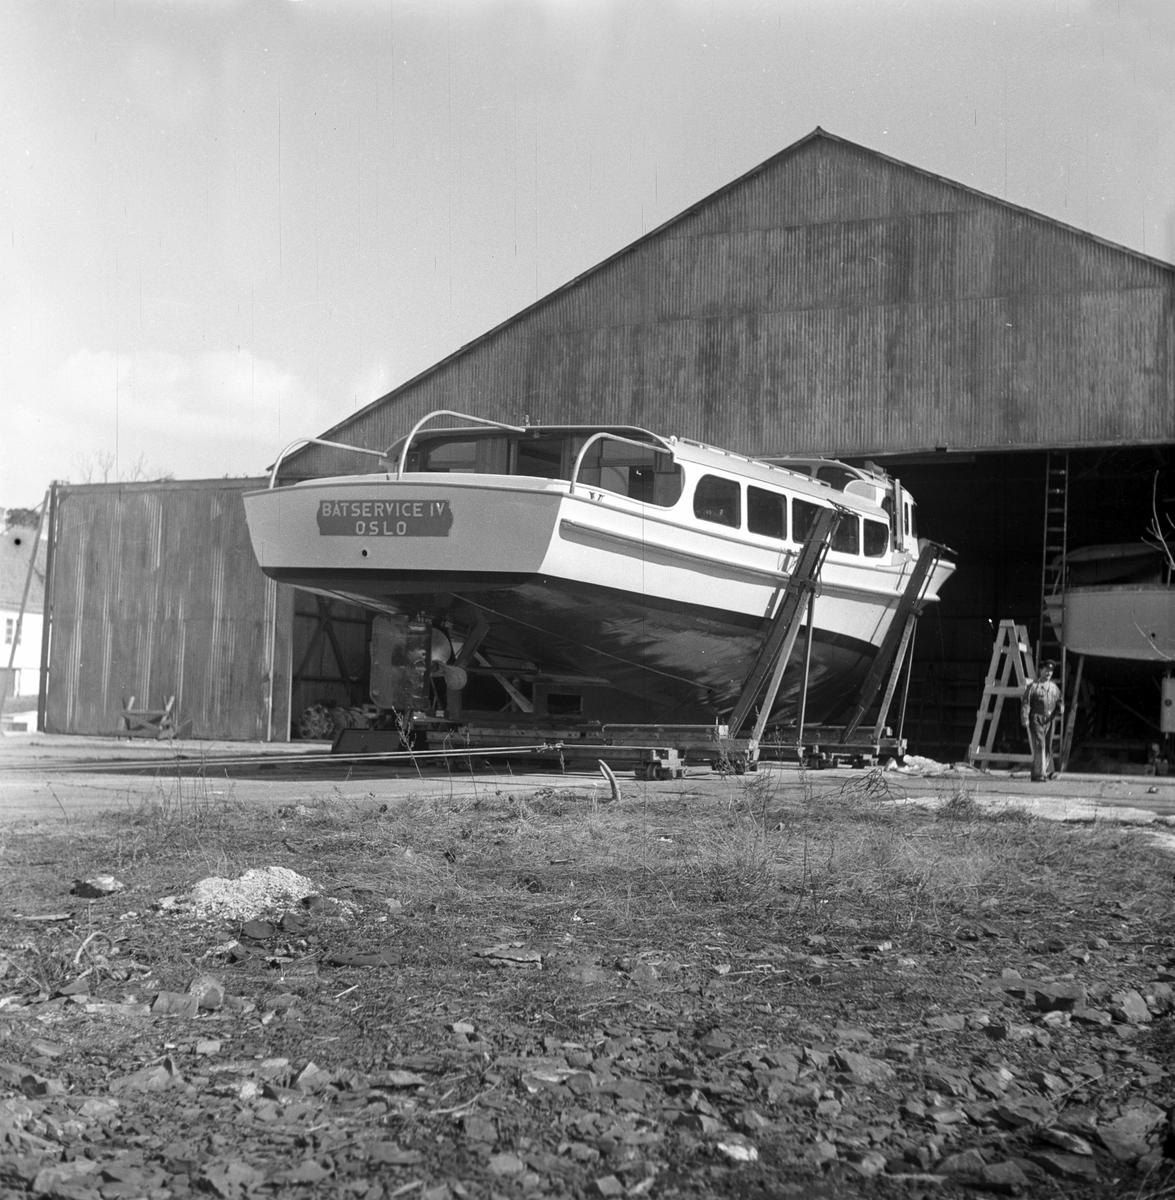 Serie. Bygdøyfergen "Båtservice IV" ligger på land for vedlikehold. Fotografert 8. april 1954.